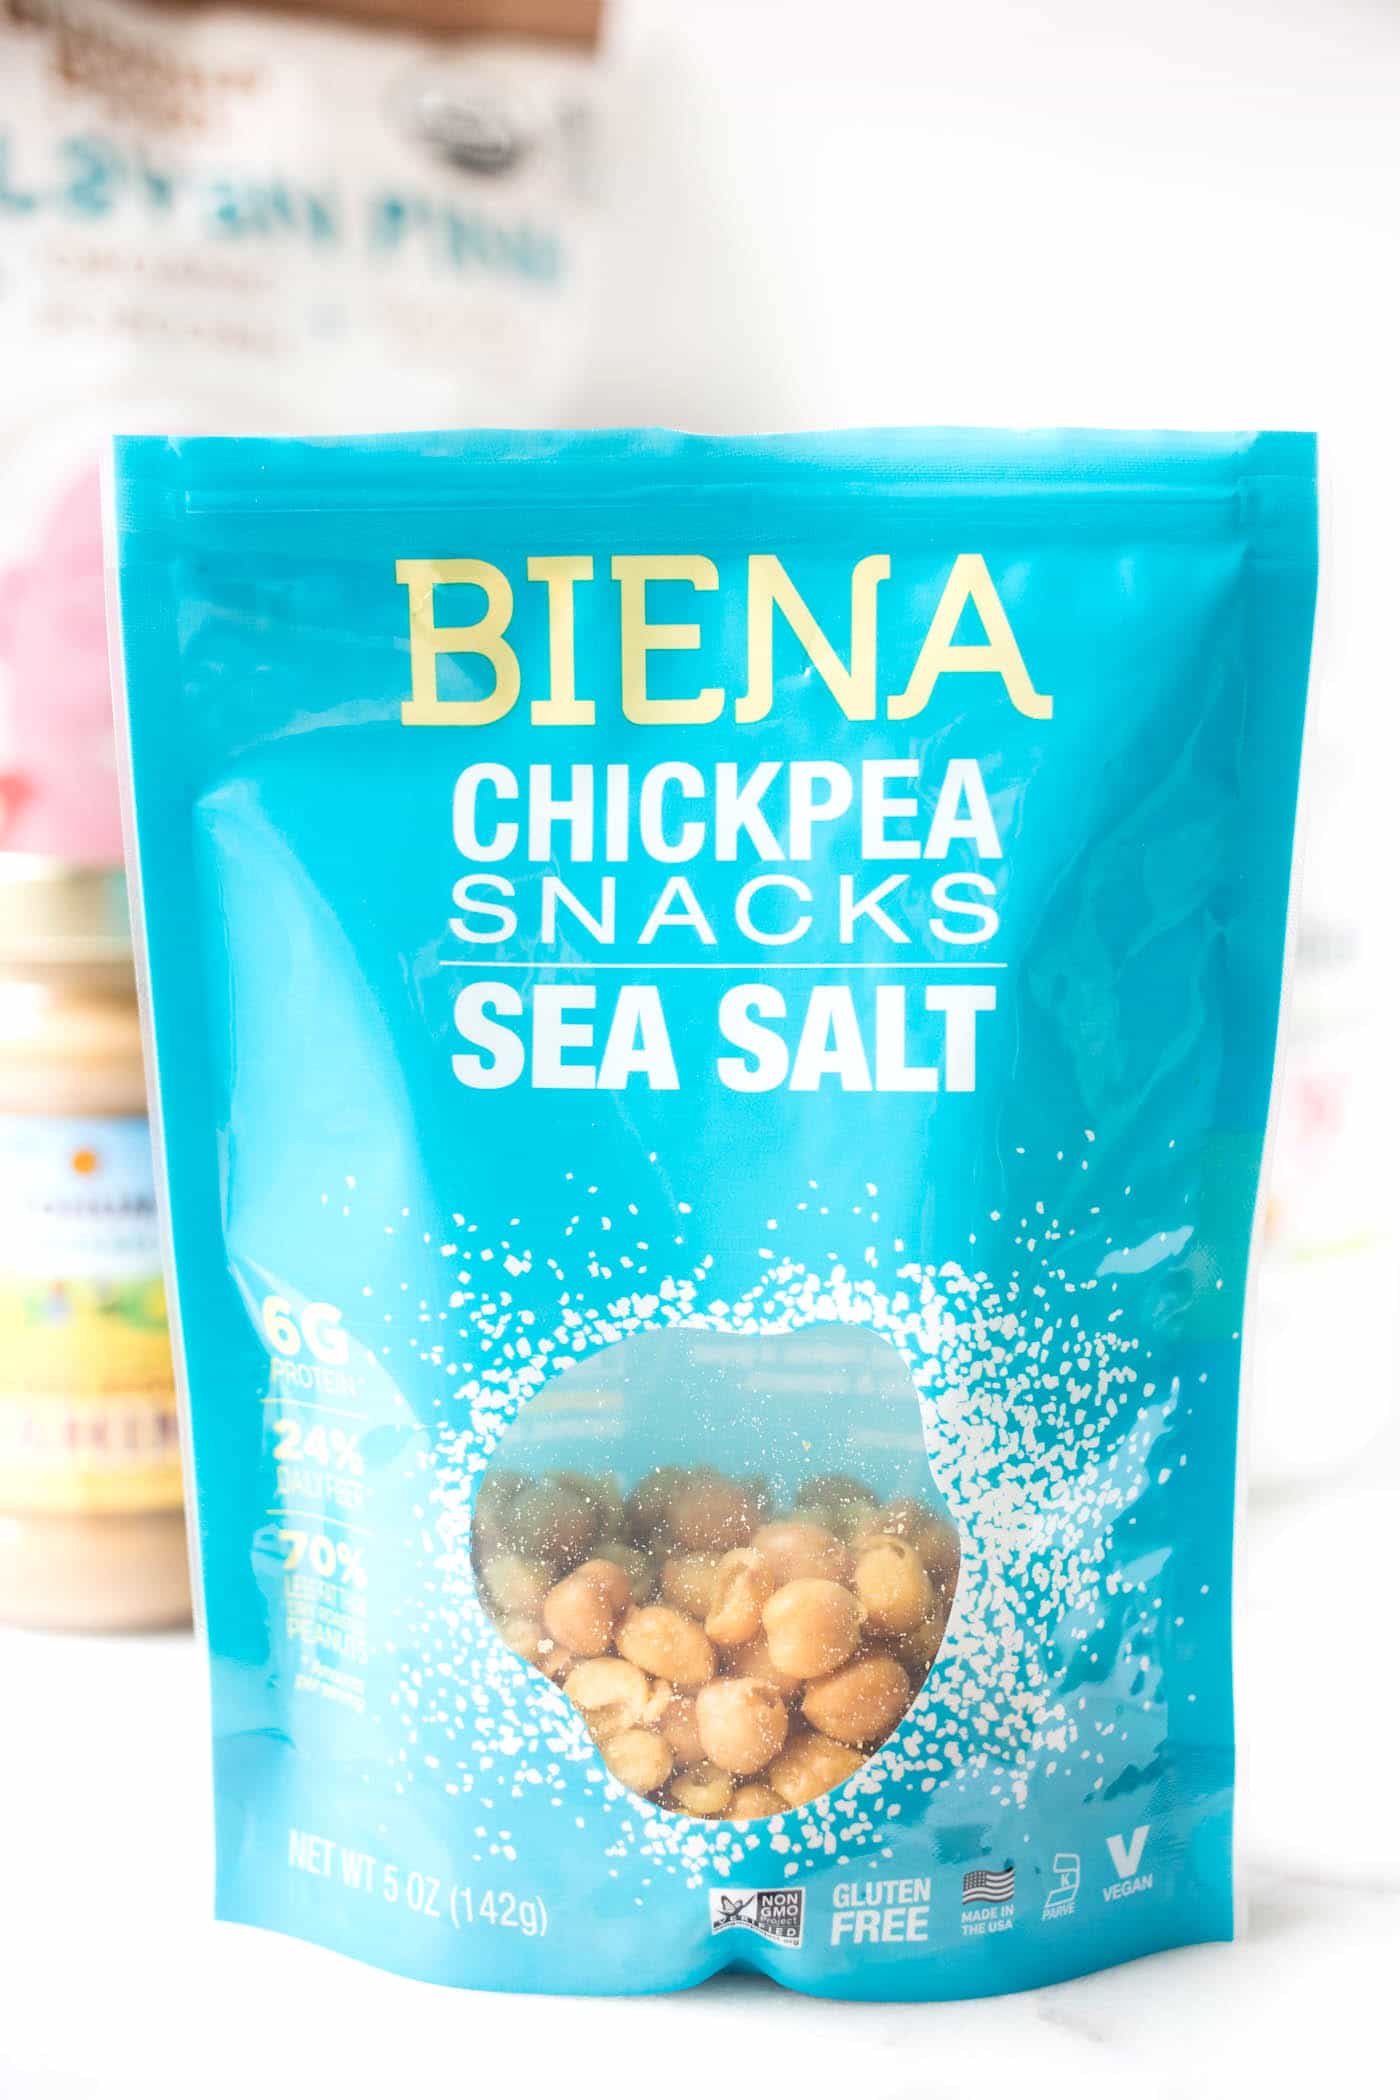 Biena Crispy Chickpea Snacks! The best and healthiest chickpeas I've found yet!